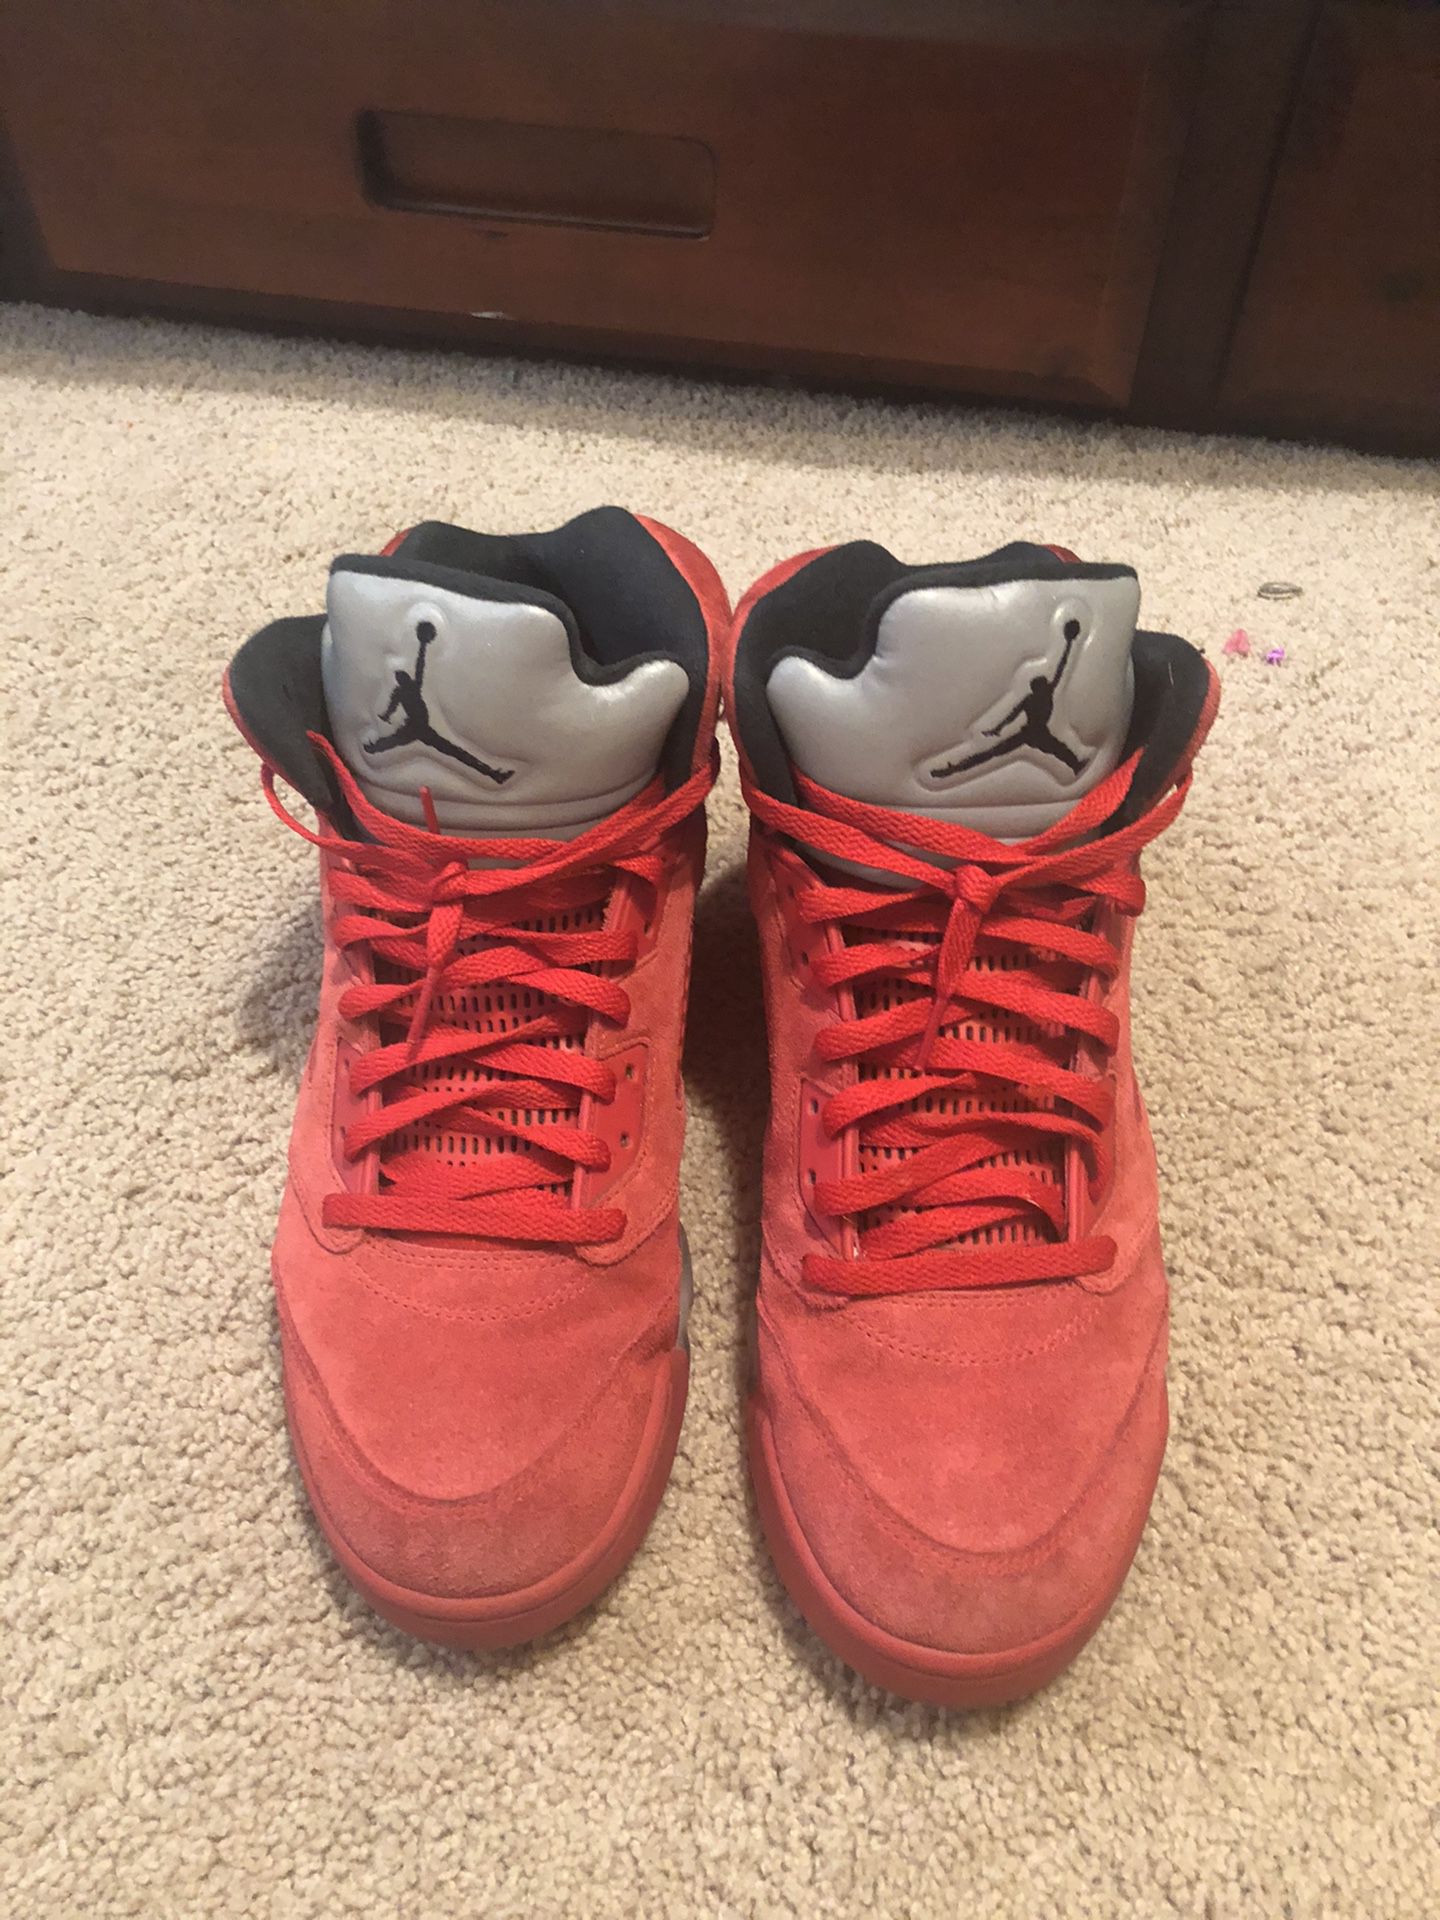 Air Jordan 5 Red Suede size 13